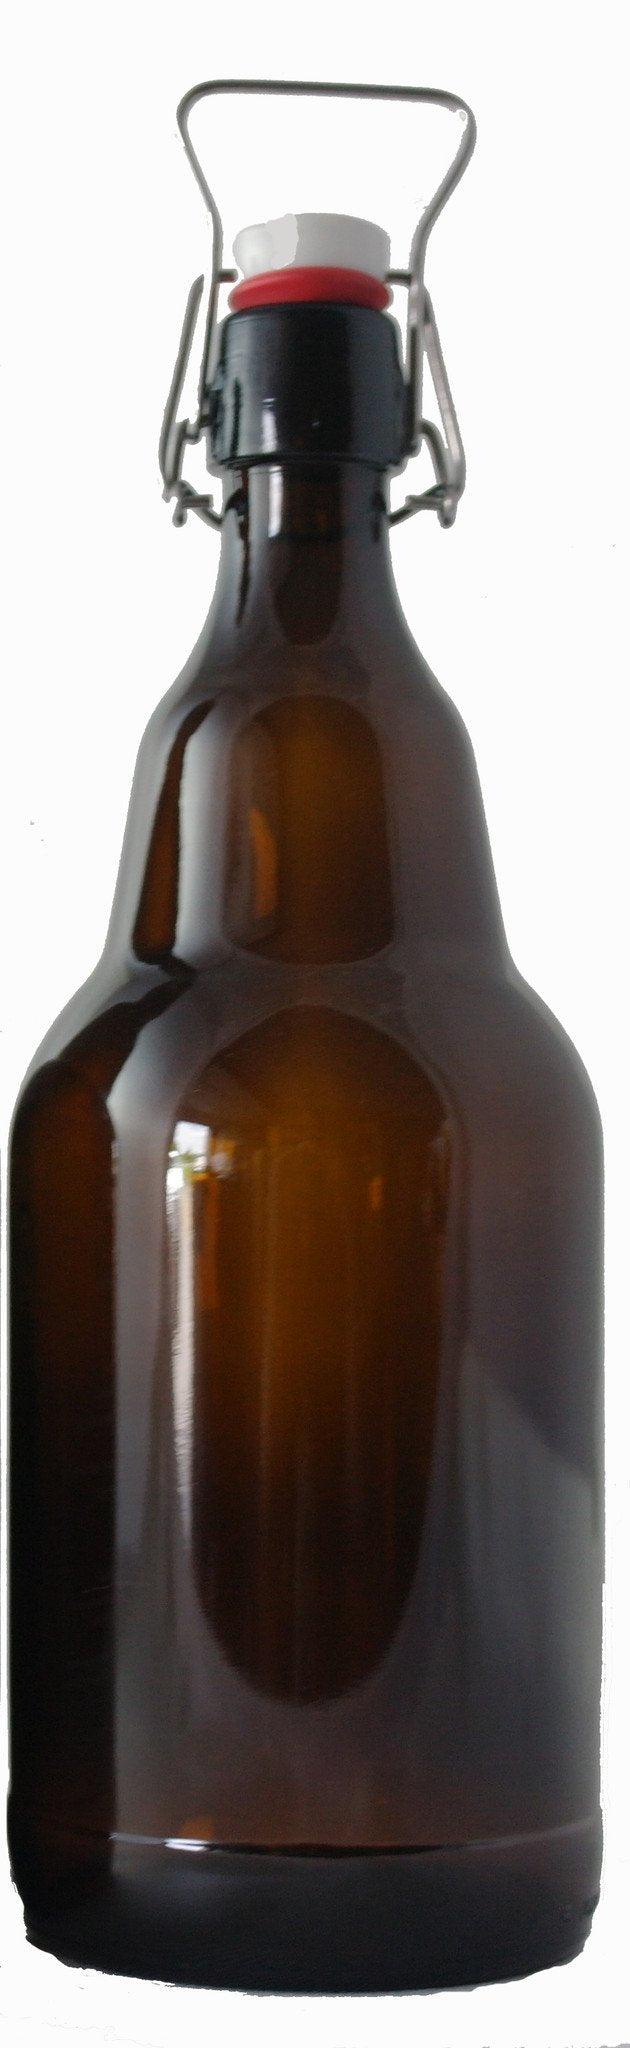 2 Litre Unprinted Glass Swingtop Growler Pallet (405 Growlers) - CraftBeer Growlers Ltd - glass, glass growlers, Growler - Growlers - Draught Beer - Beer Dispenser Units - Kegs